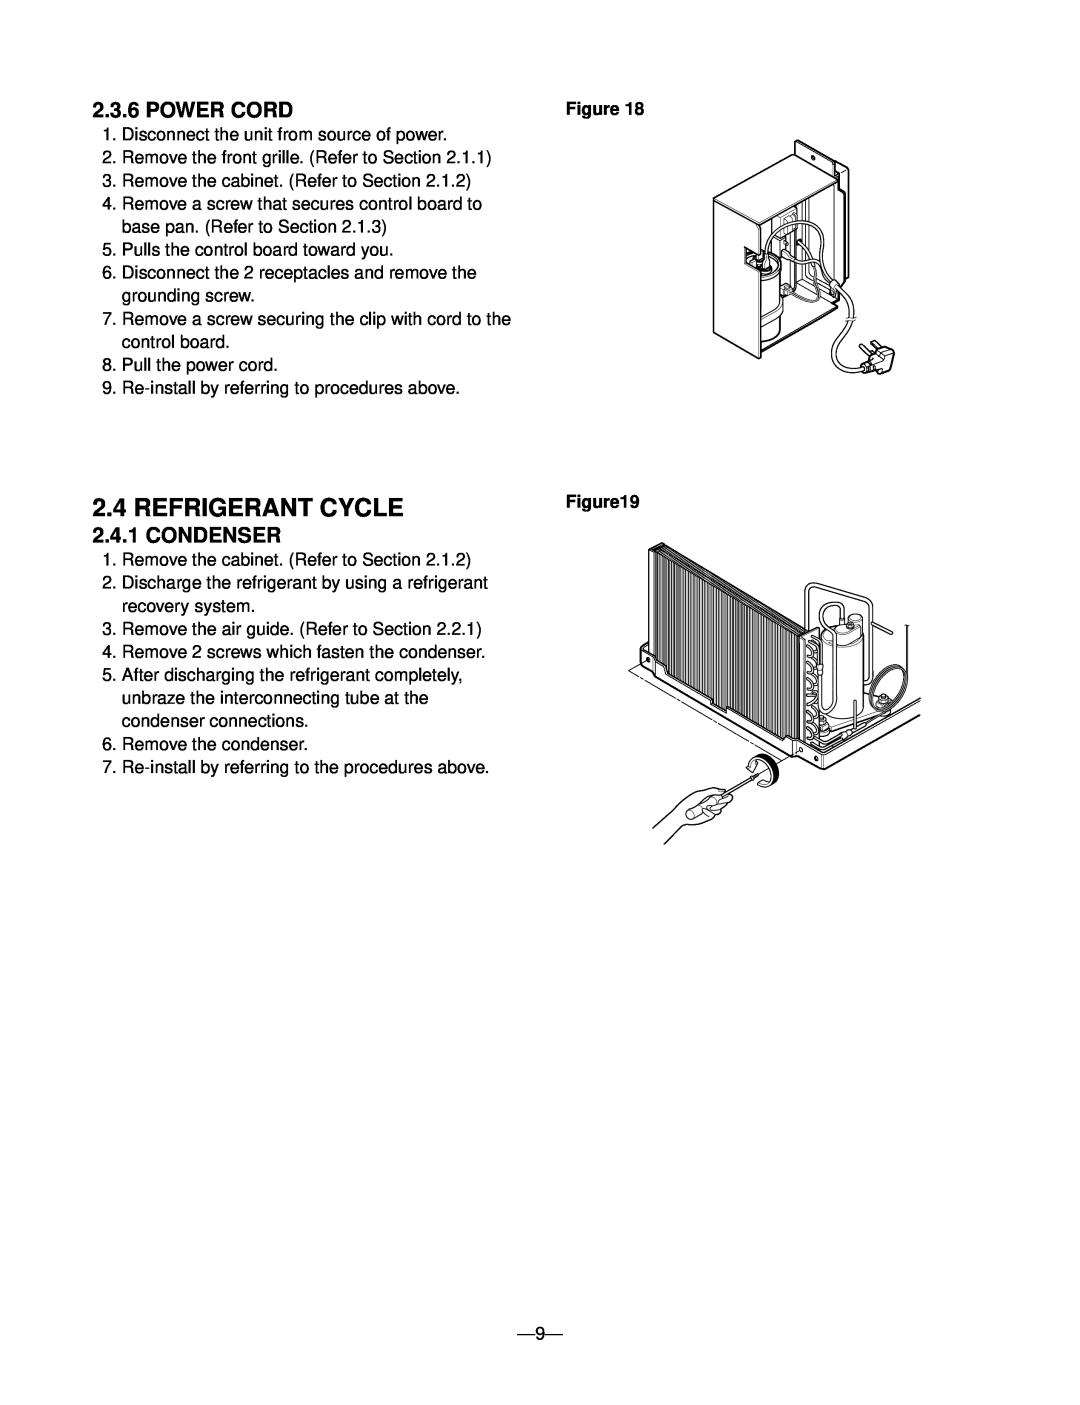 Friedrich CP06A10, CP05A10 manual Refrigerant Cycle, Power Cord, Condenser 